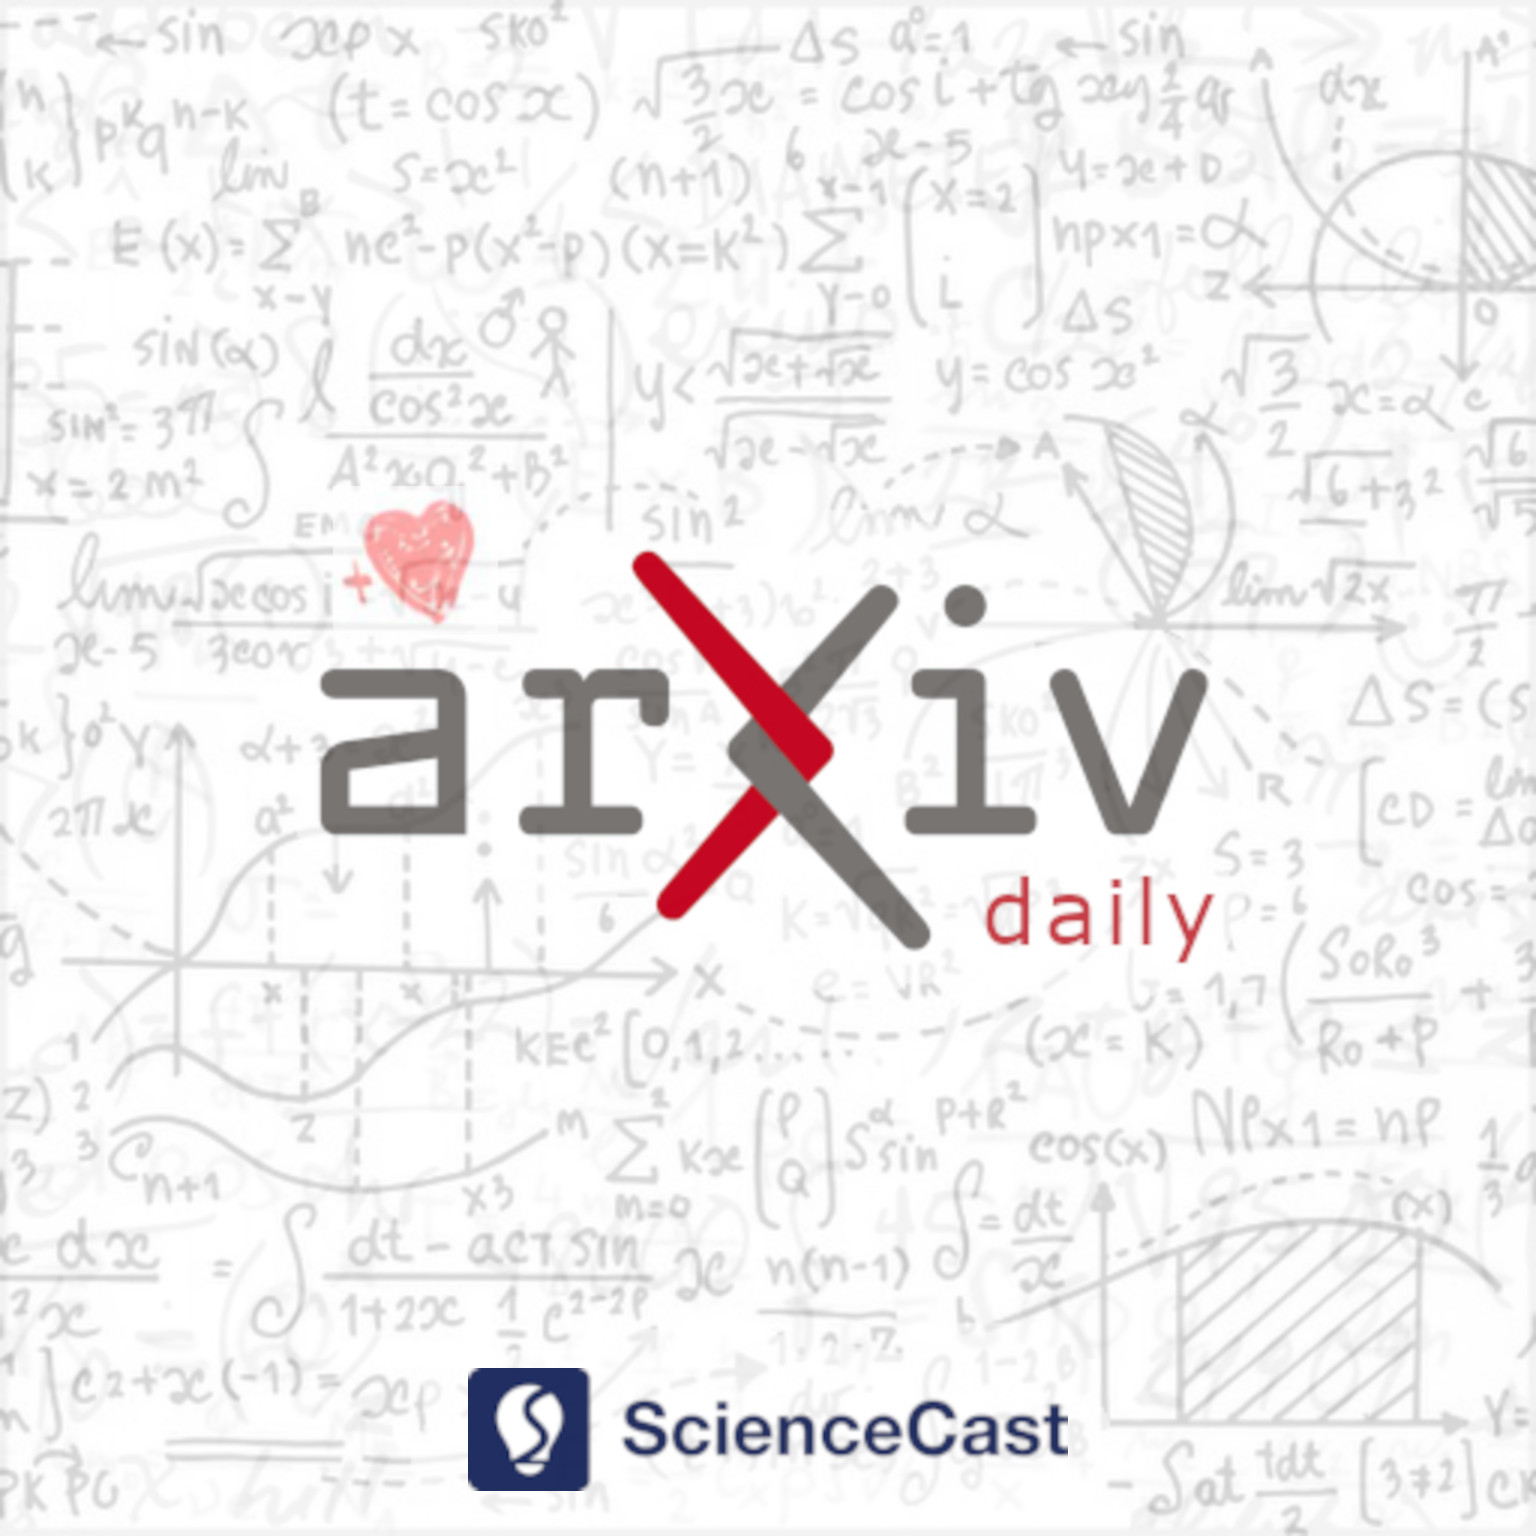 arXiv daily: High Energy Physics - Phenomenology